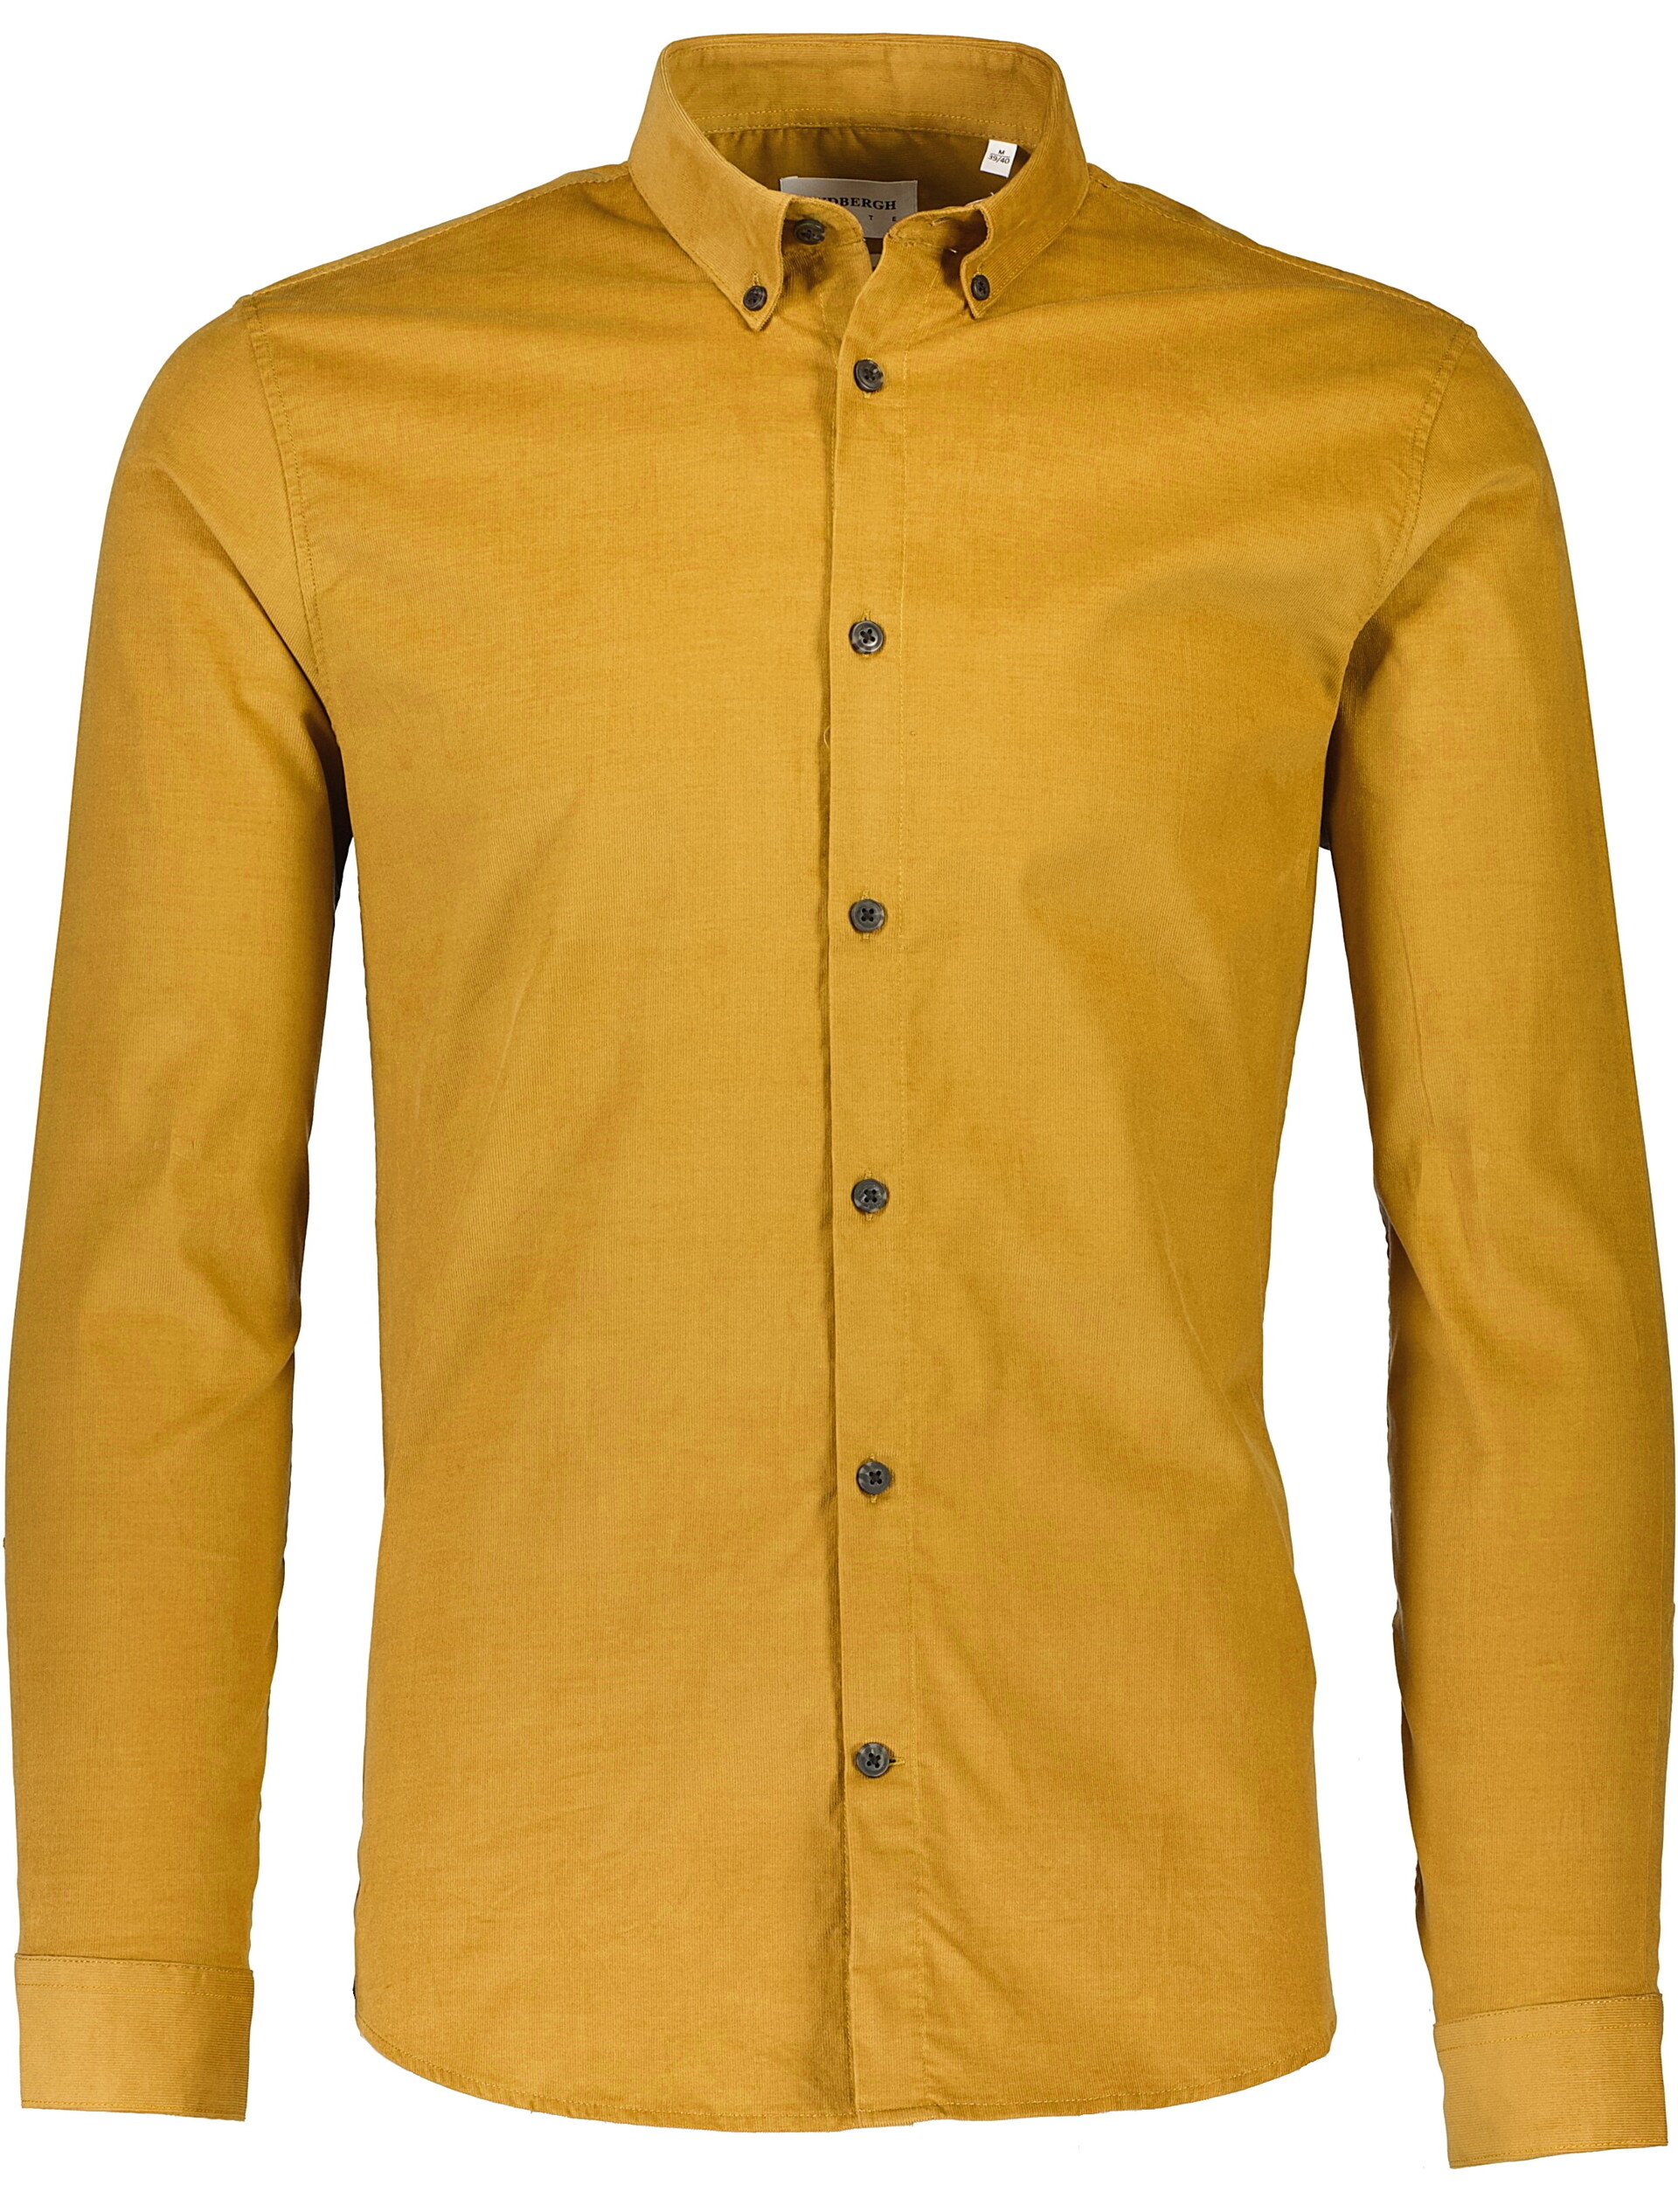 Lindbergh Corduroy shirt yellow / dark camel